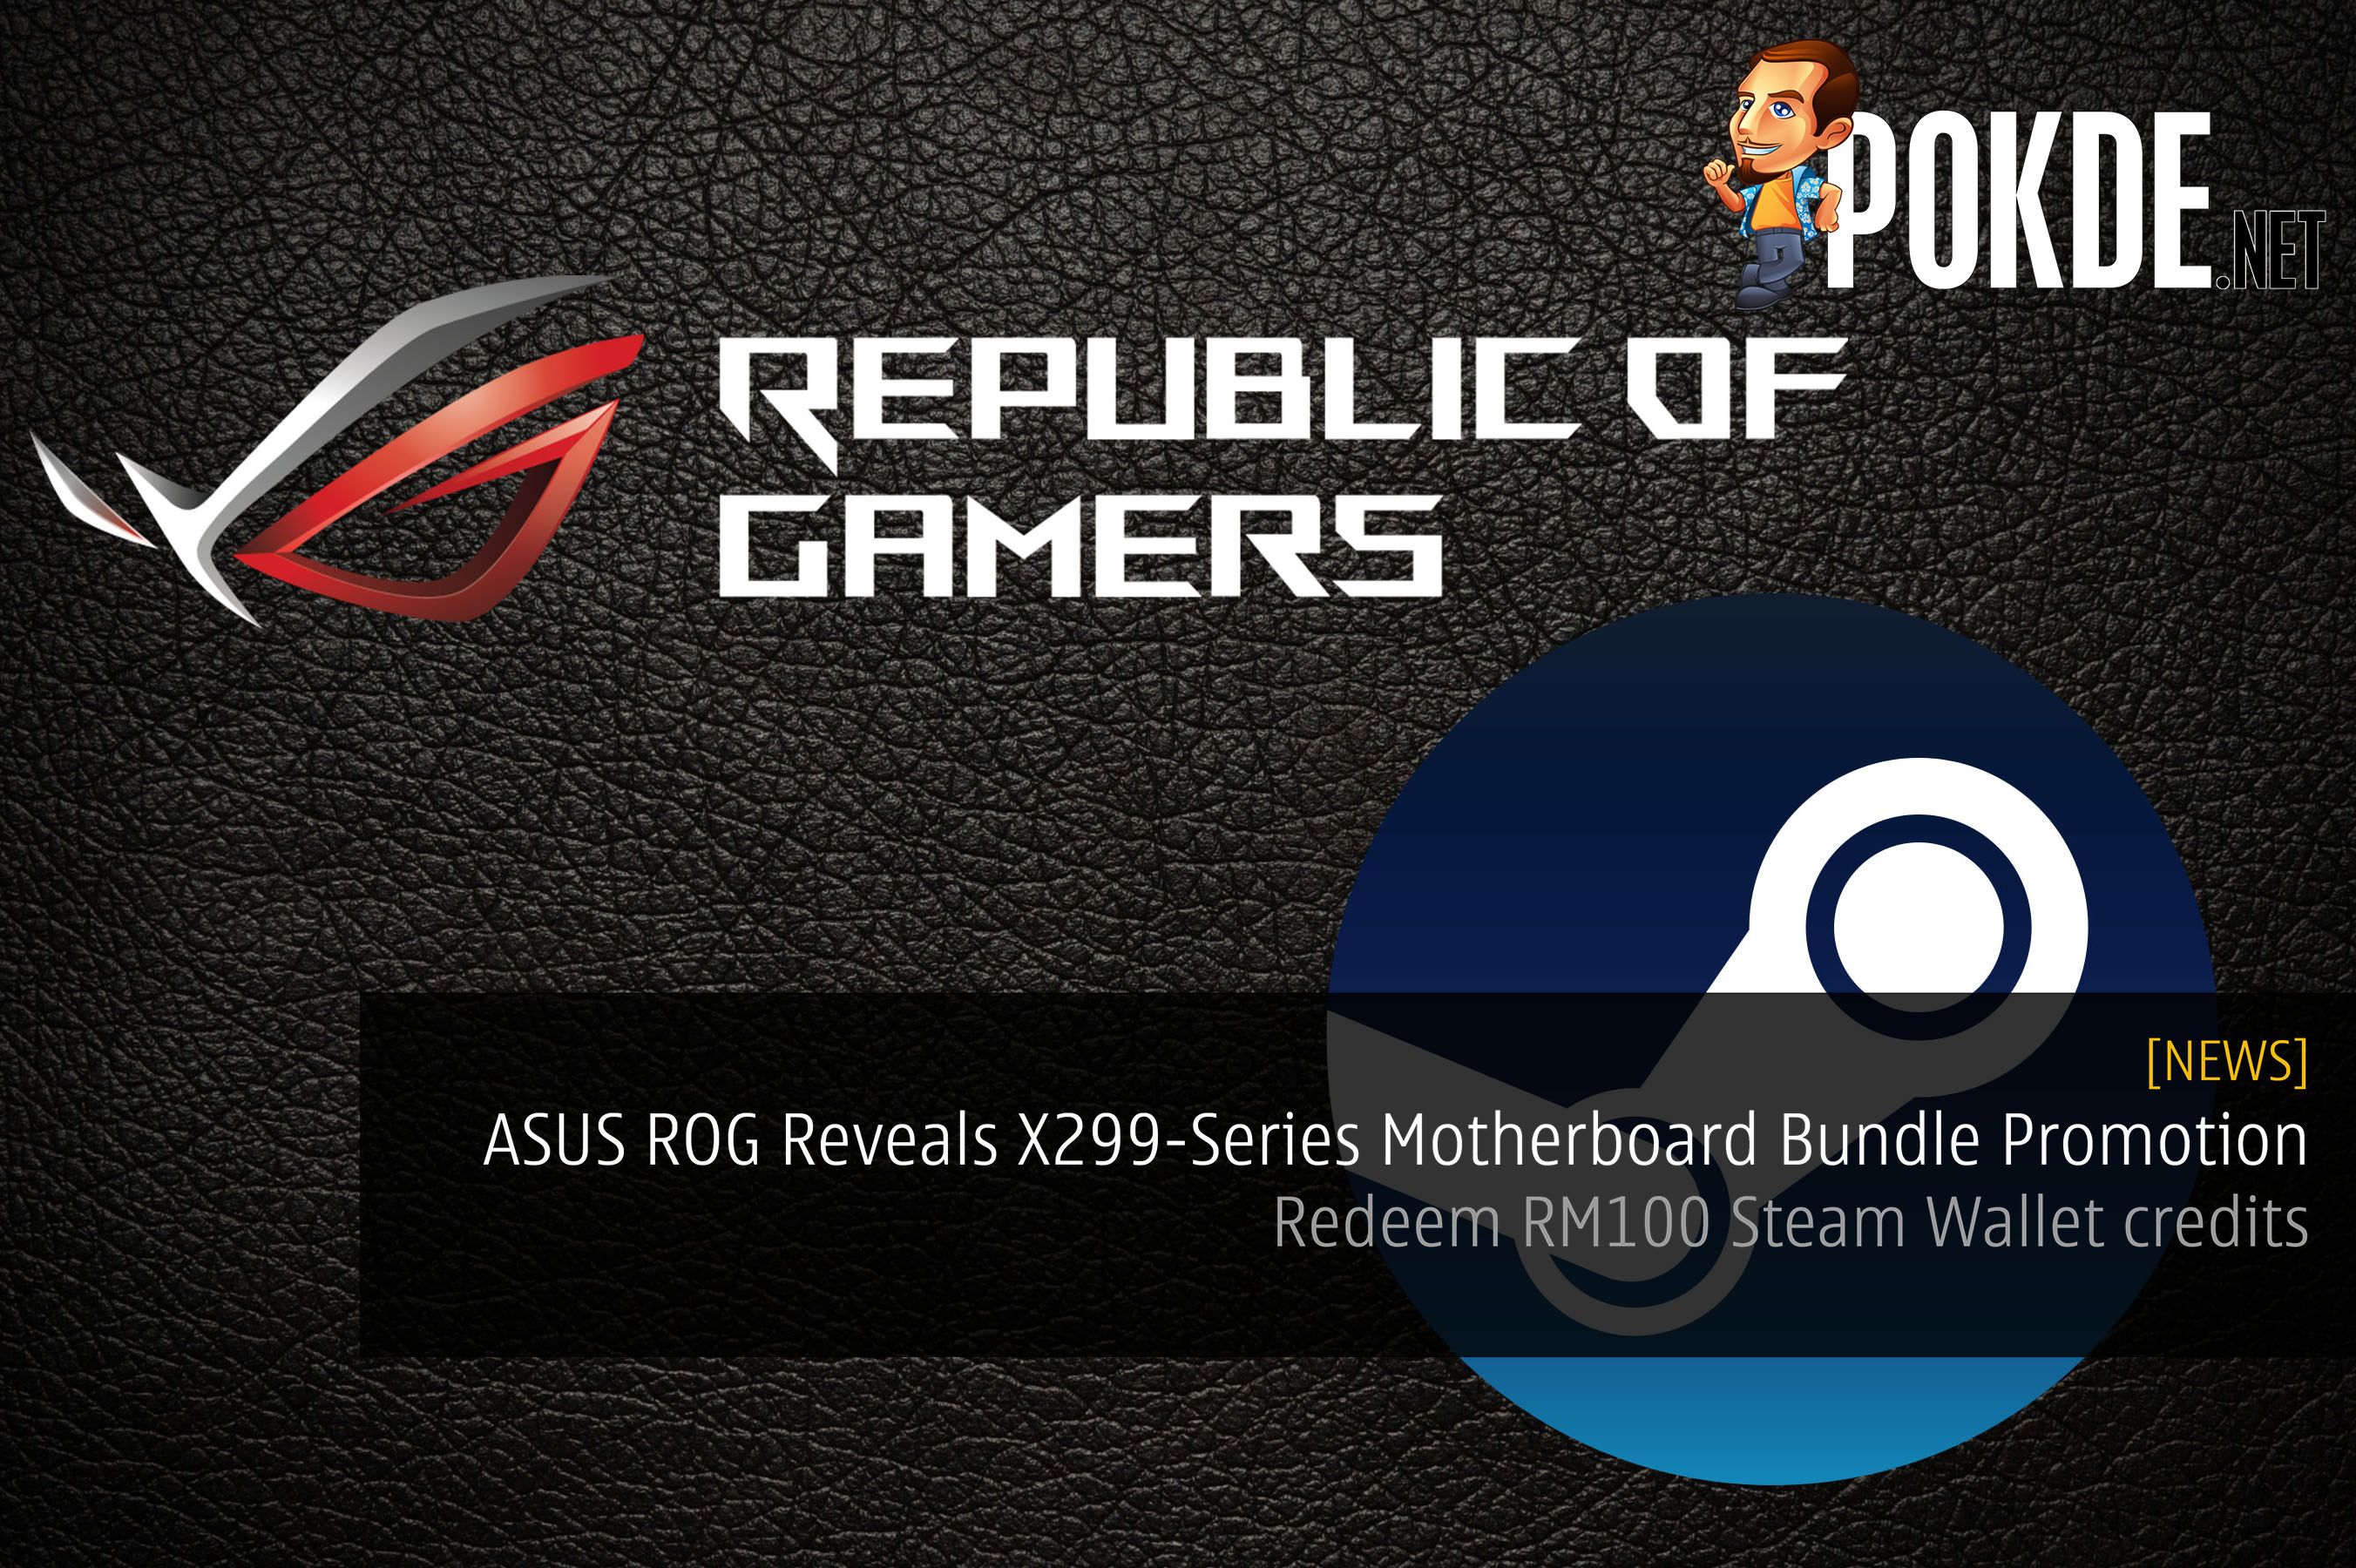 ASUS ROG Reveals X299 Motherboard Series Bundle Promotion - Redeem RM100 Steam Wallet credits 32